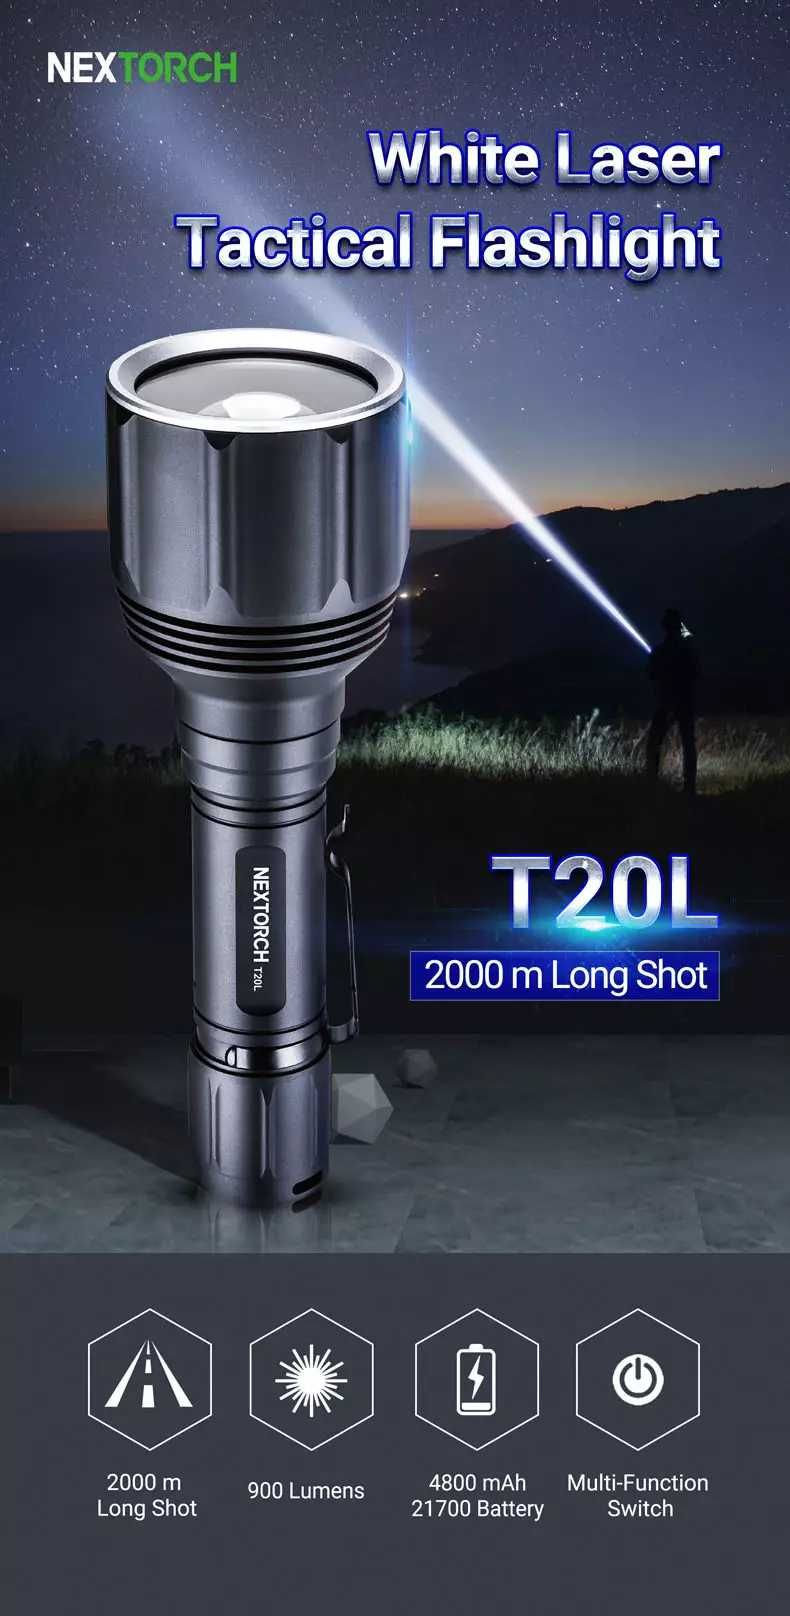 Taktyczna mocna latarka laserowa 2000m na patrol